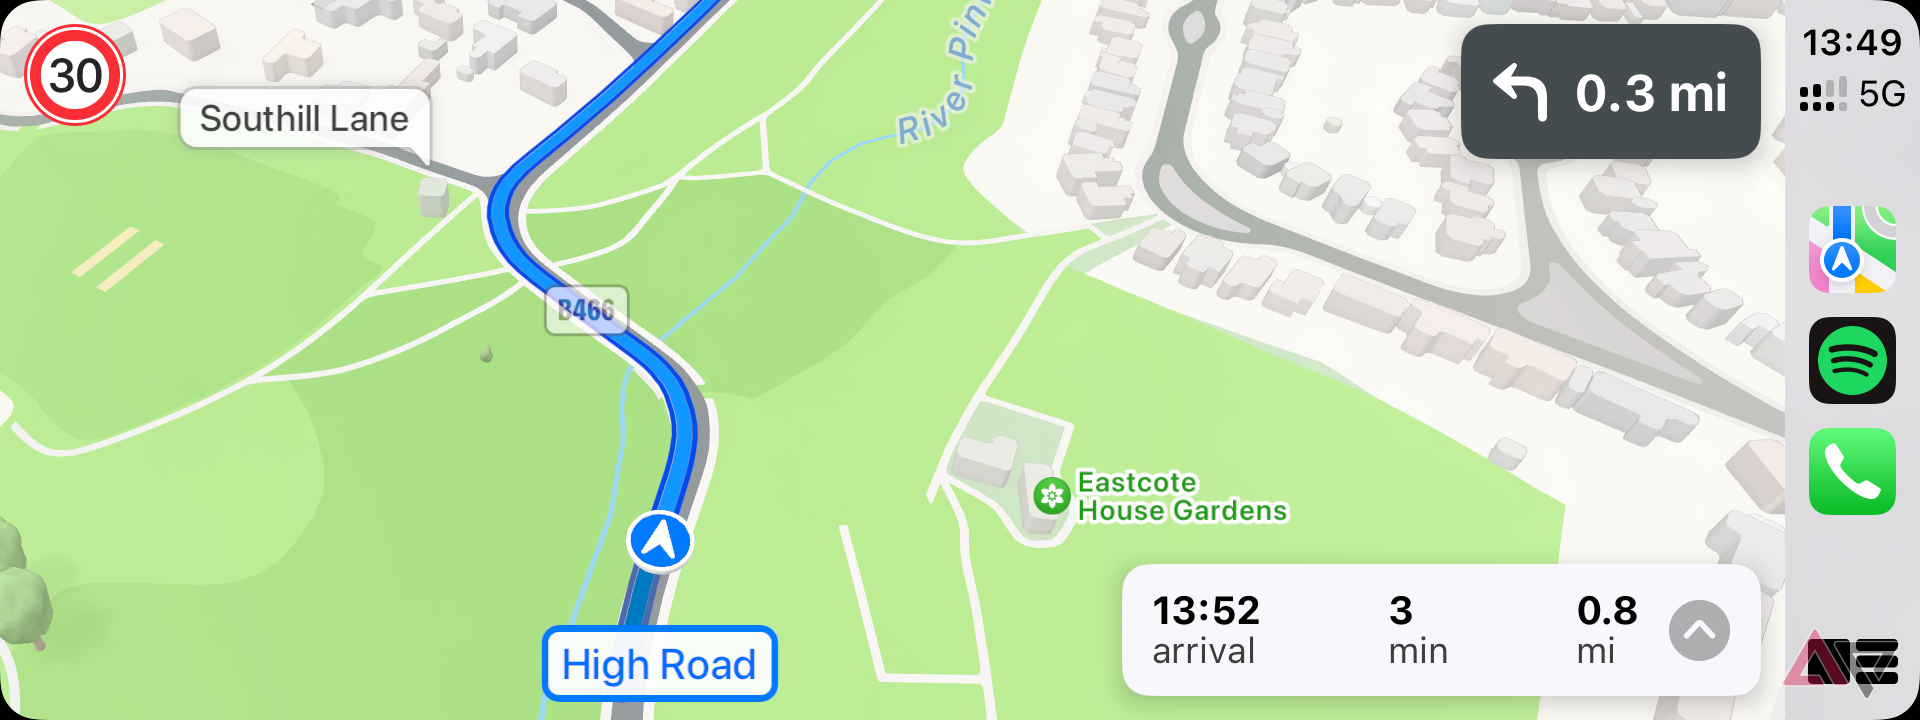 A screenshot captured of the maps screen on Apple CarPlay